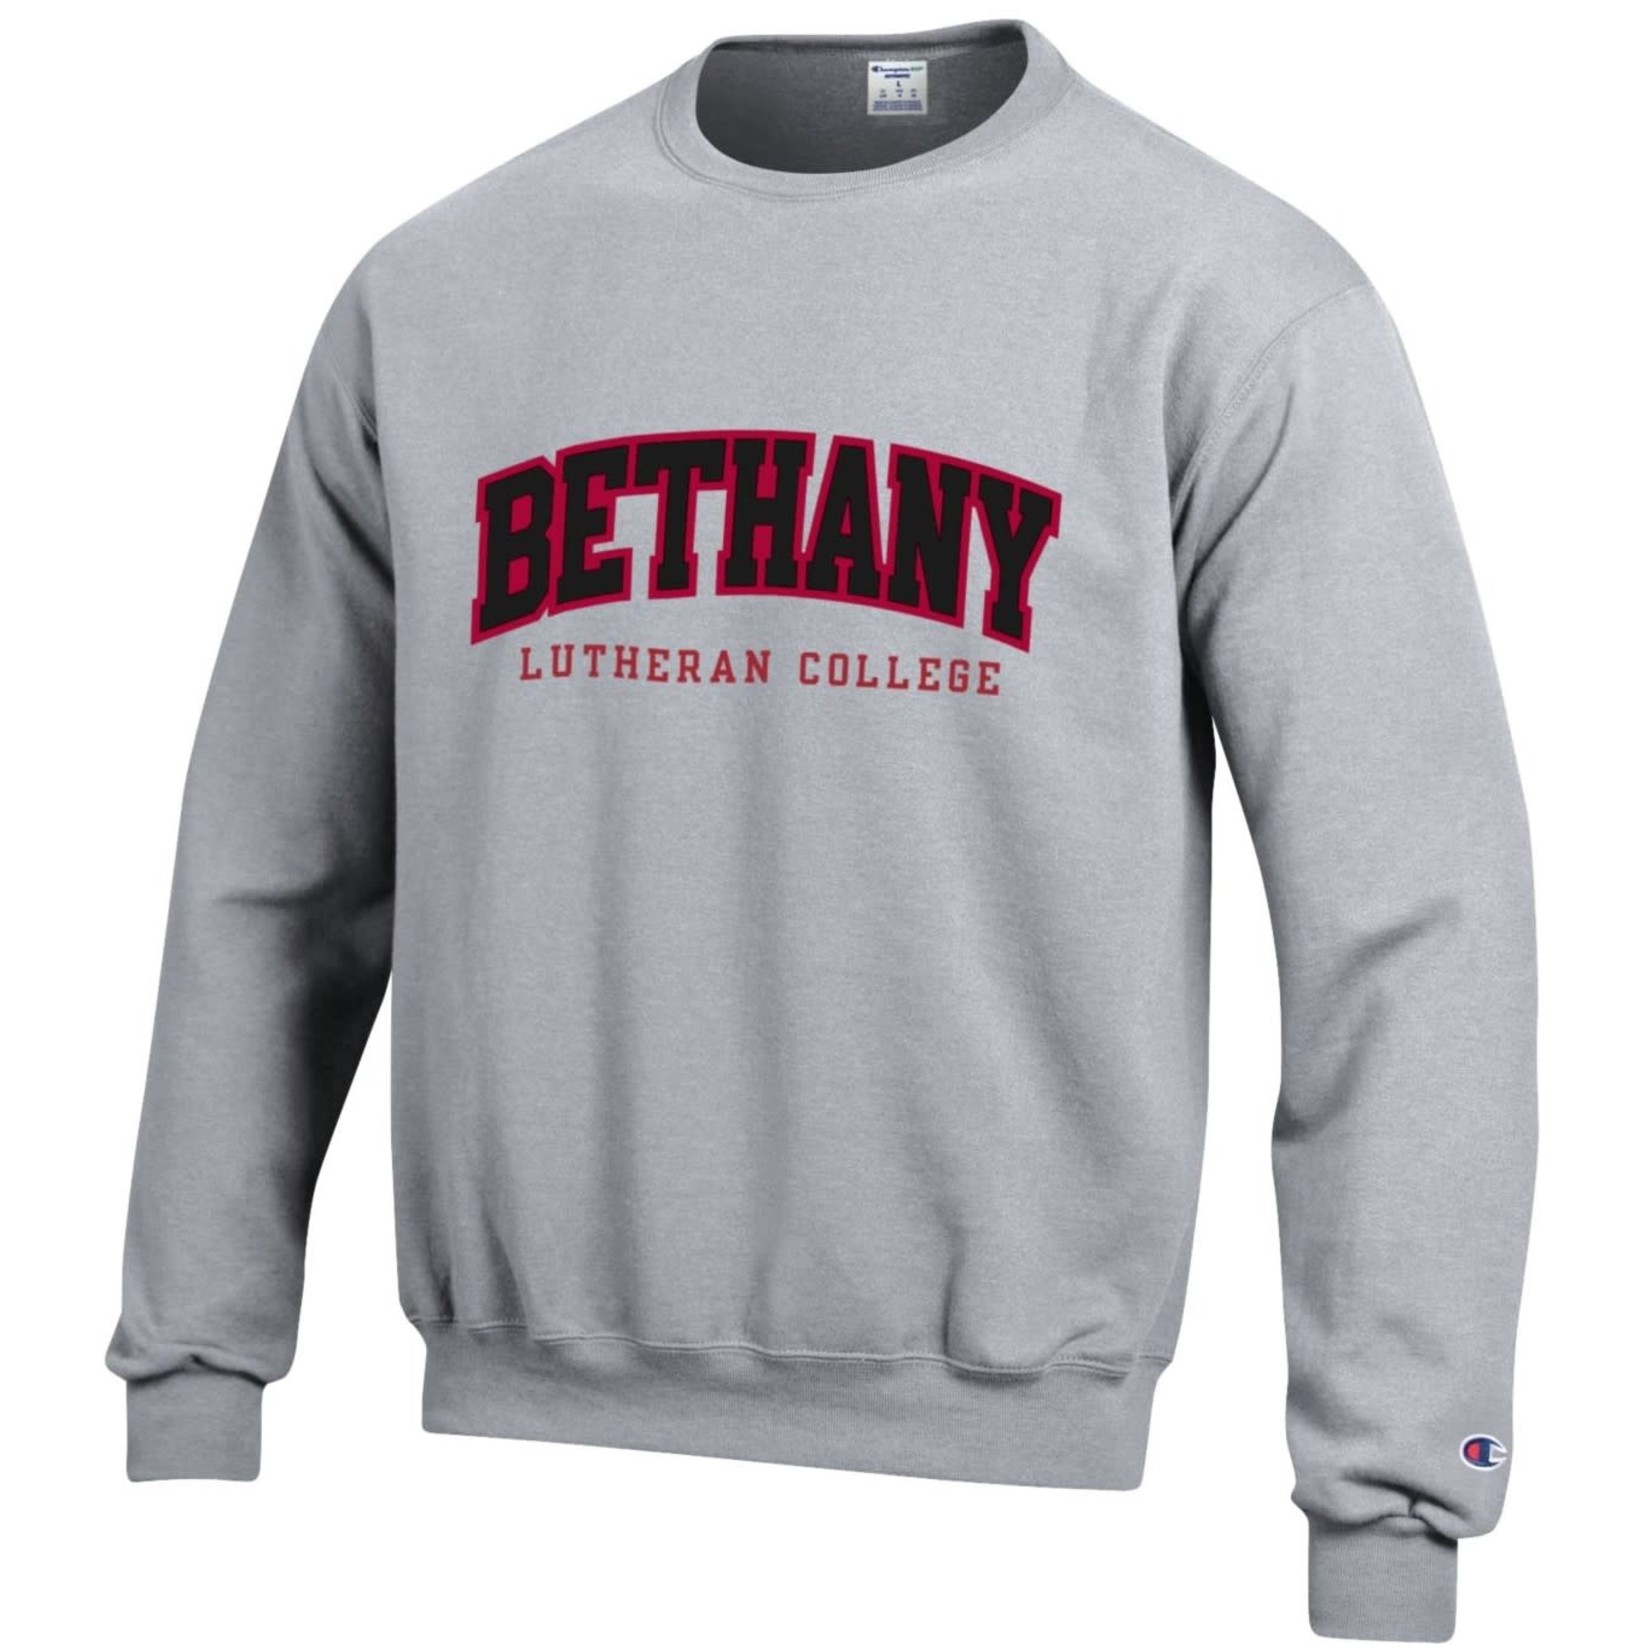 Champion Bethany Lutheran College Sweatshirt - Bethany Lutheran College ...